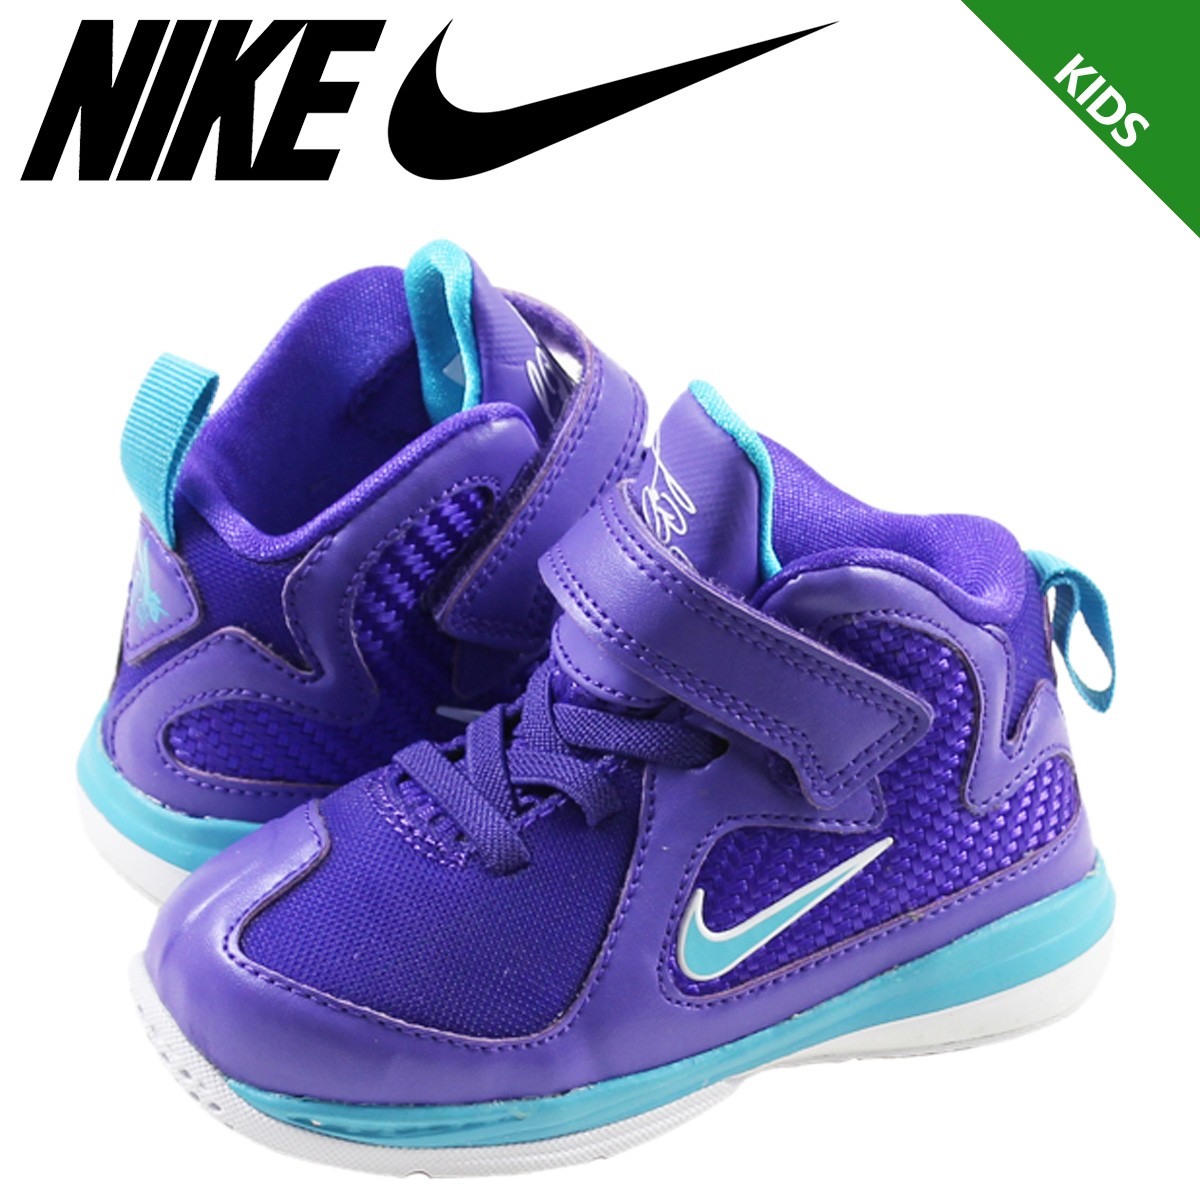 kids purple sneakers